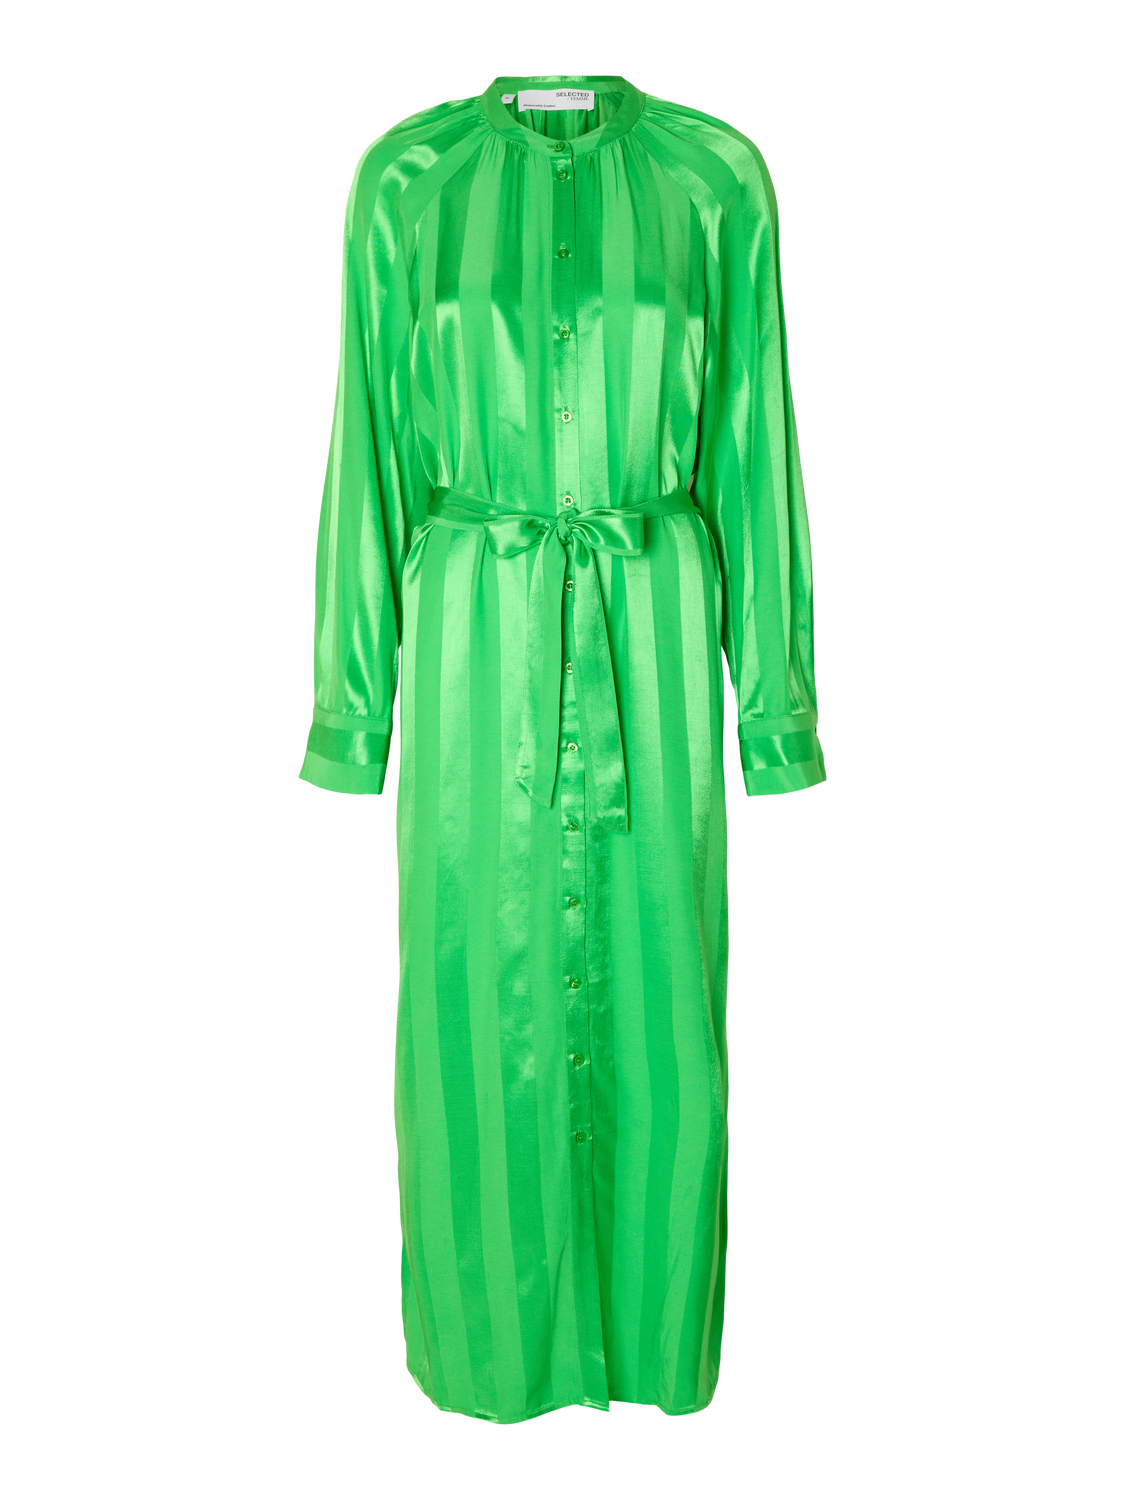 SLFCHRISTELLE Dress - Classic Green